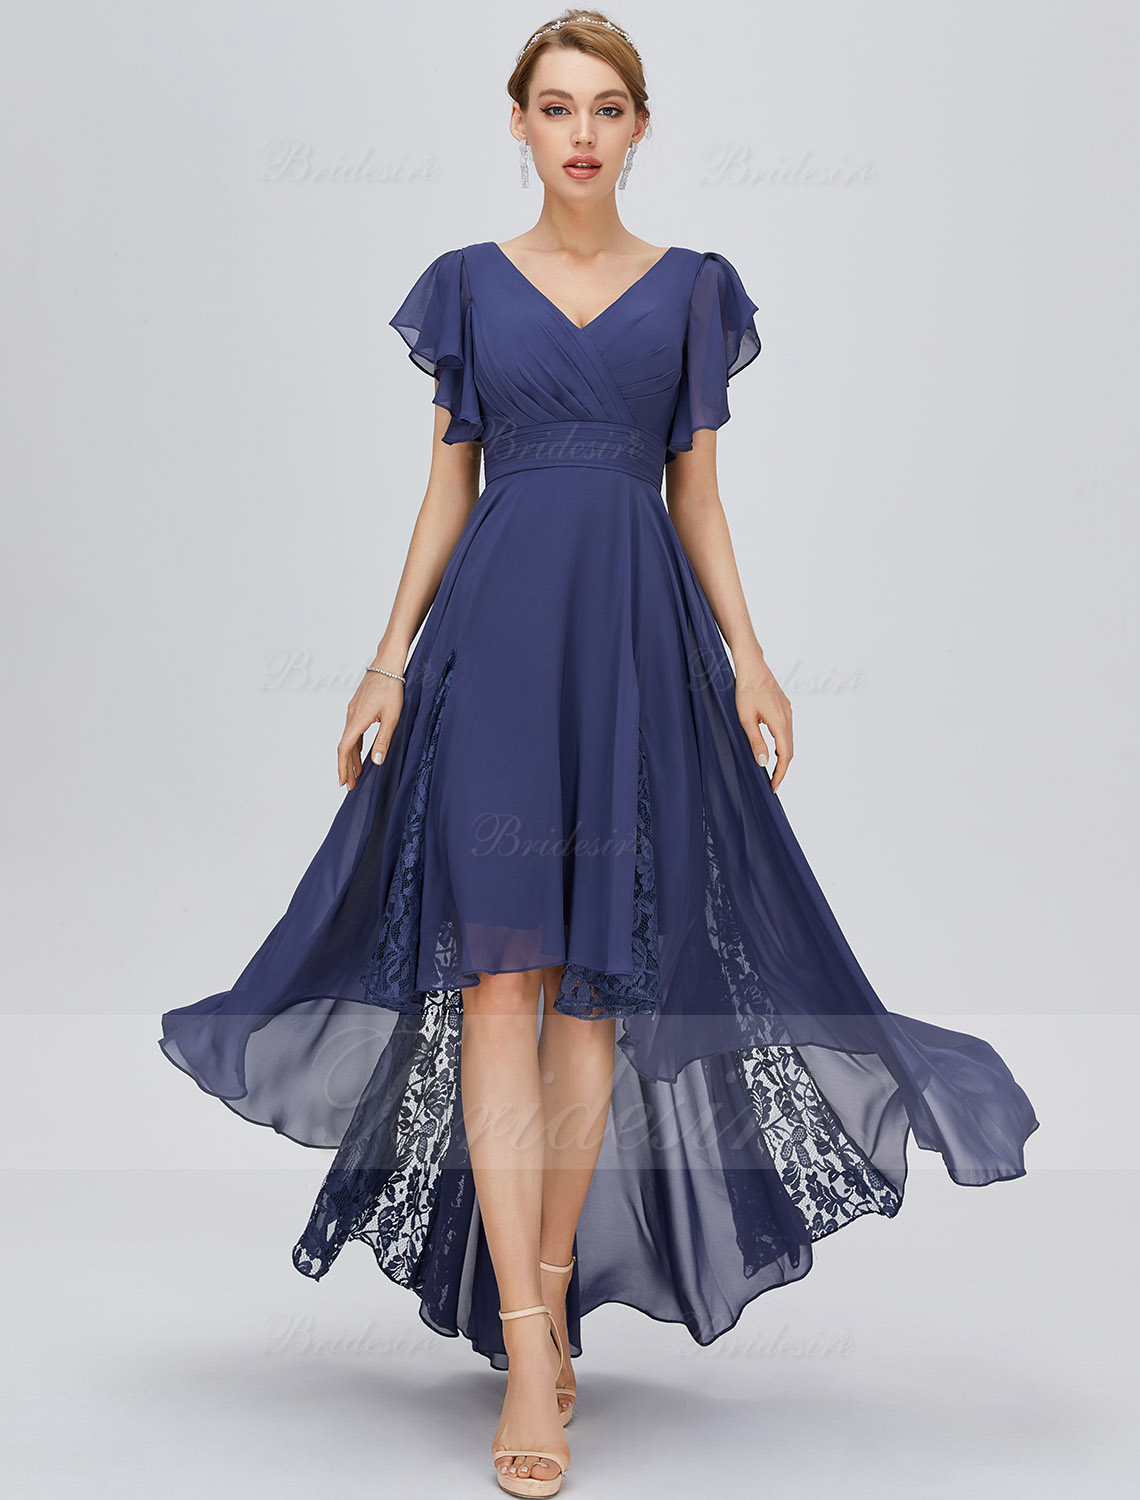 A-line V-neck Asymmetrical Chiffon Bridesmaid Dress with Lace